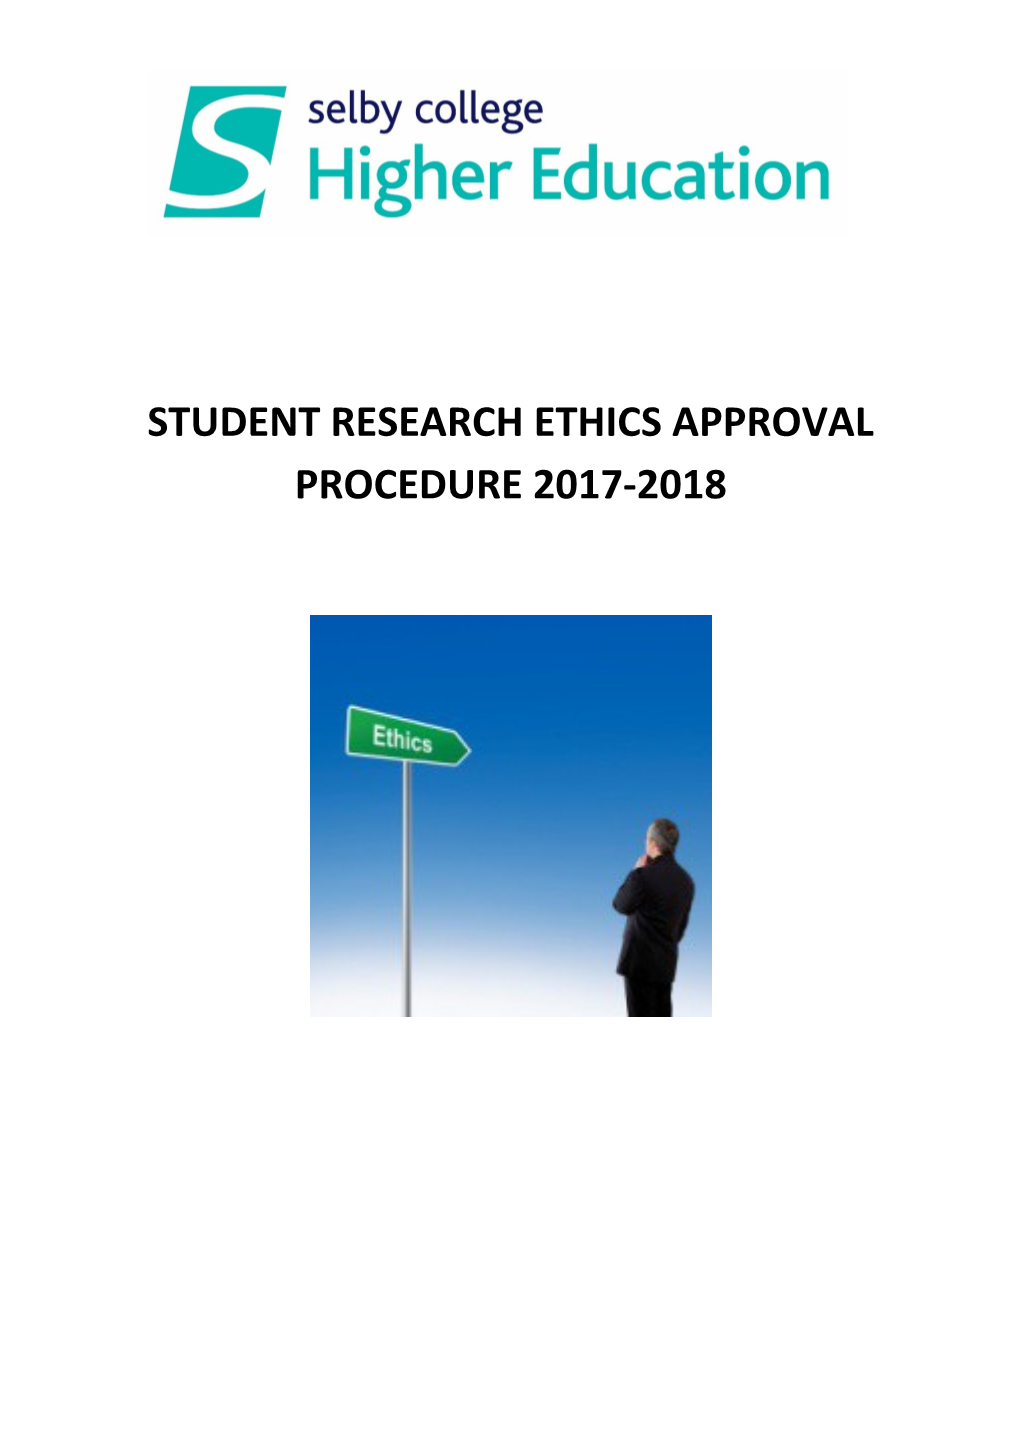 HE Student Research Ethics Procedure